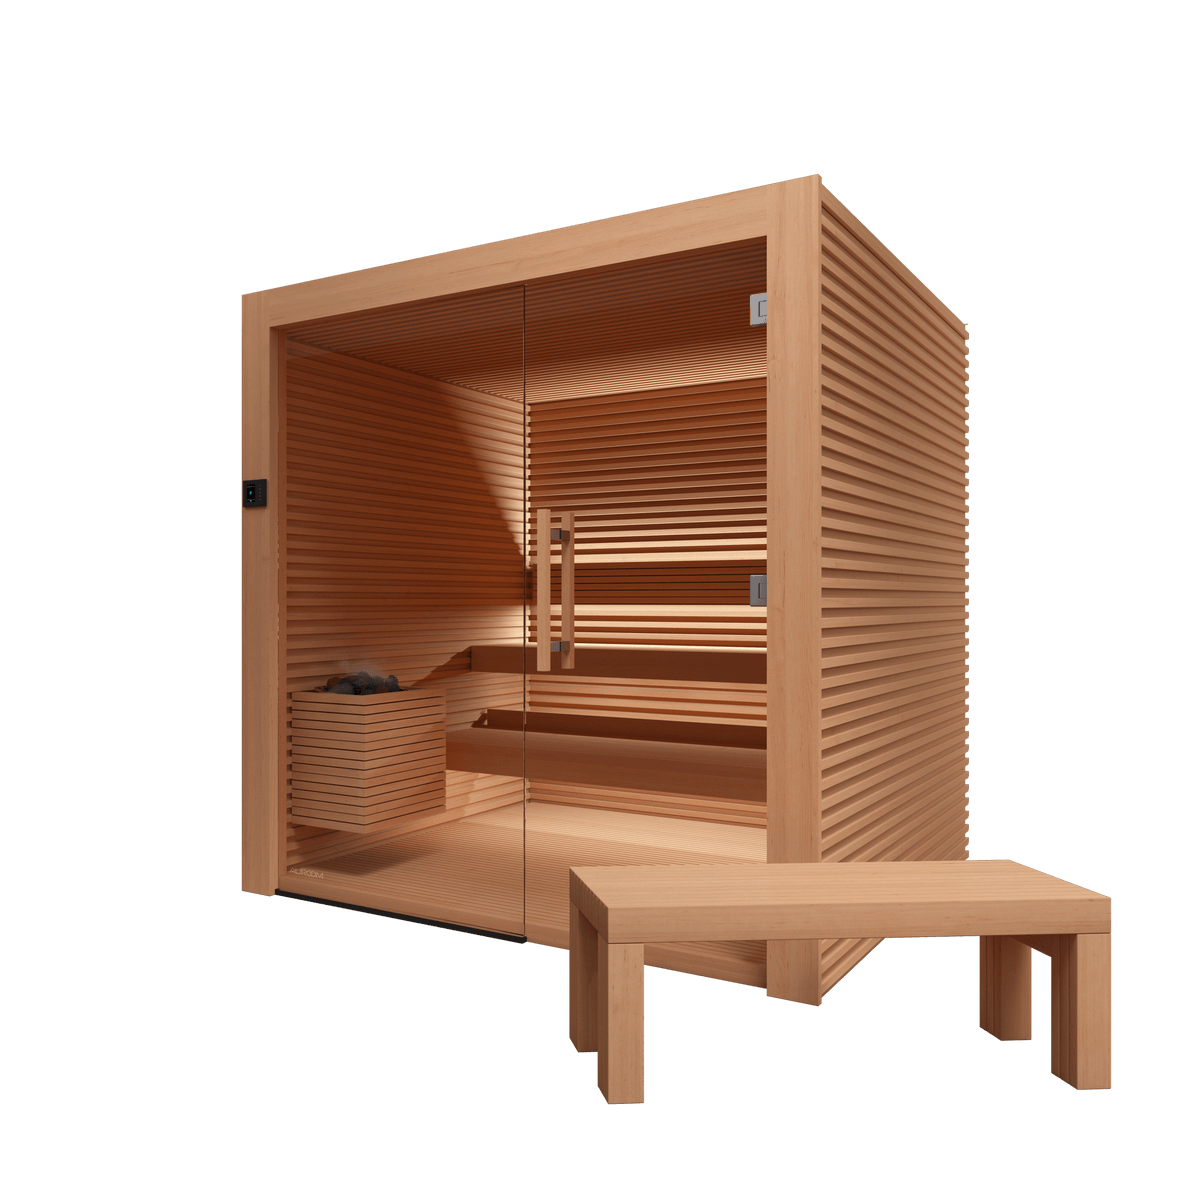 Auroom Nativa 6-Person Cabin Sauna Kit